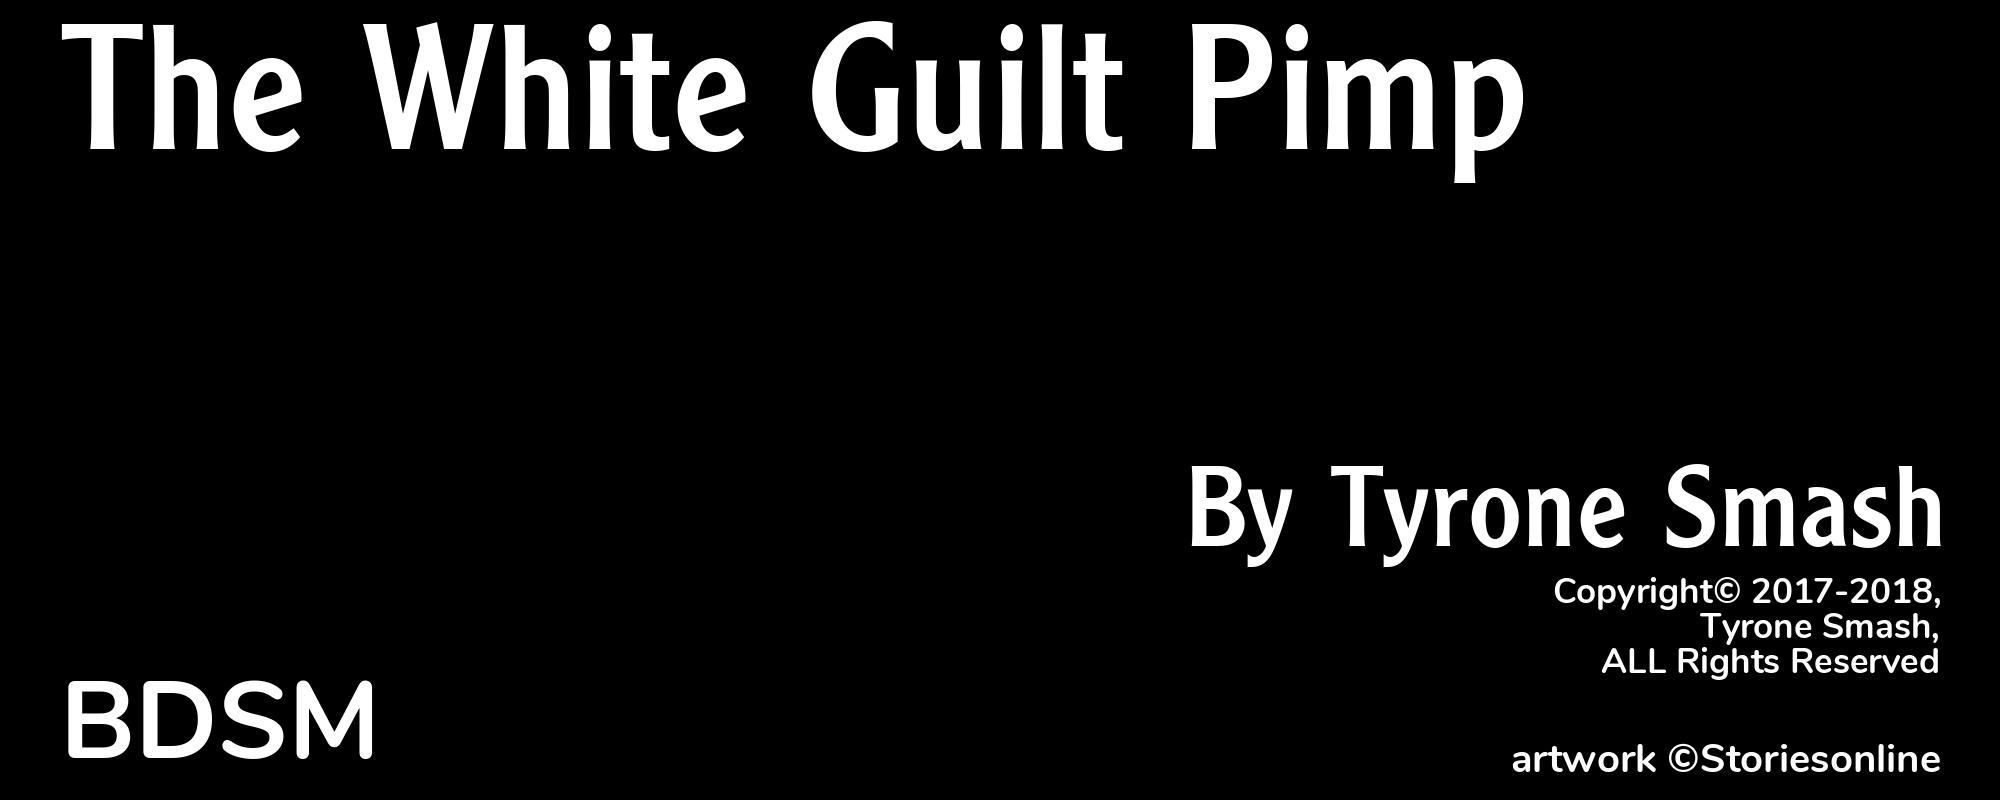 The White Guilt Pimp - Cover